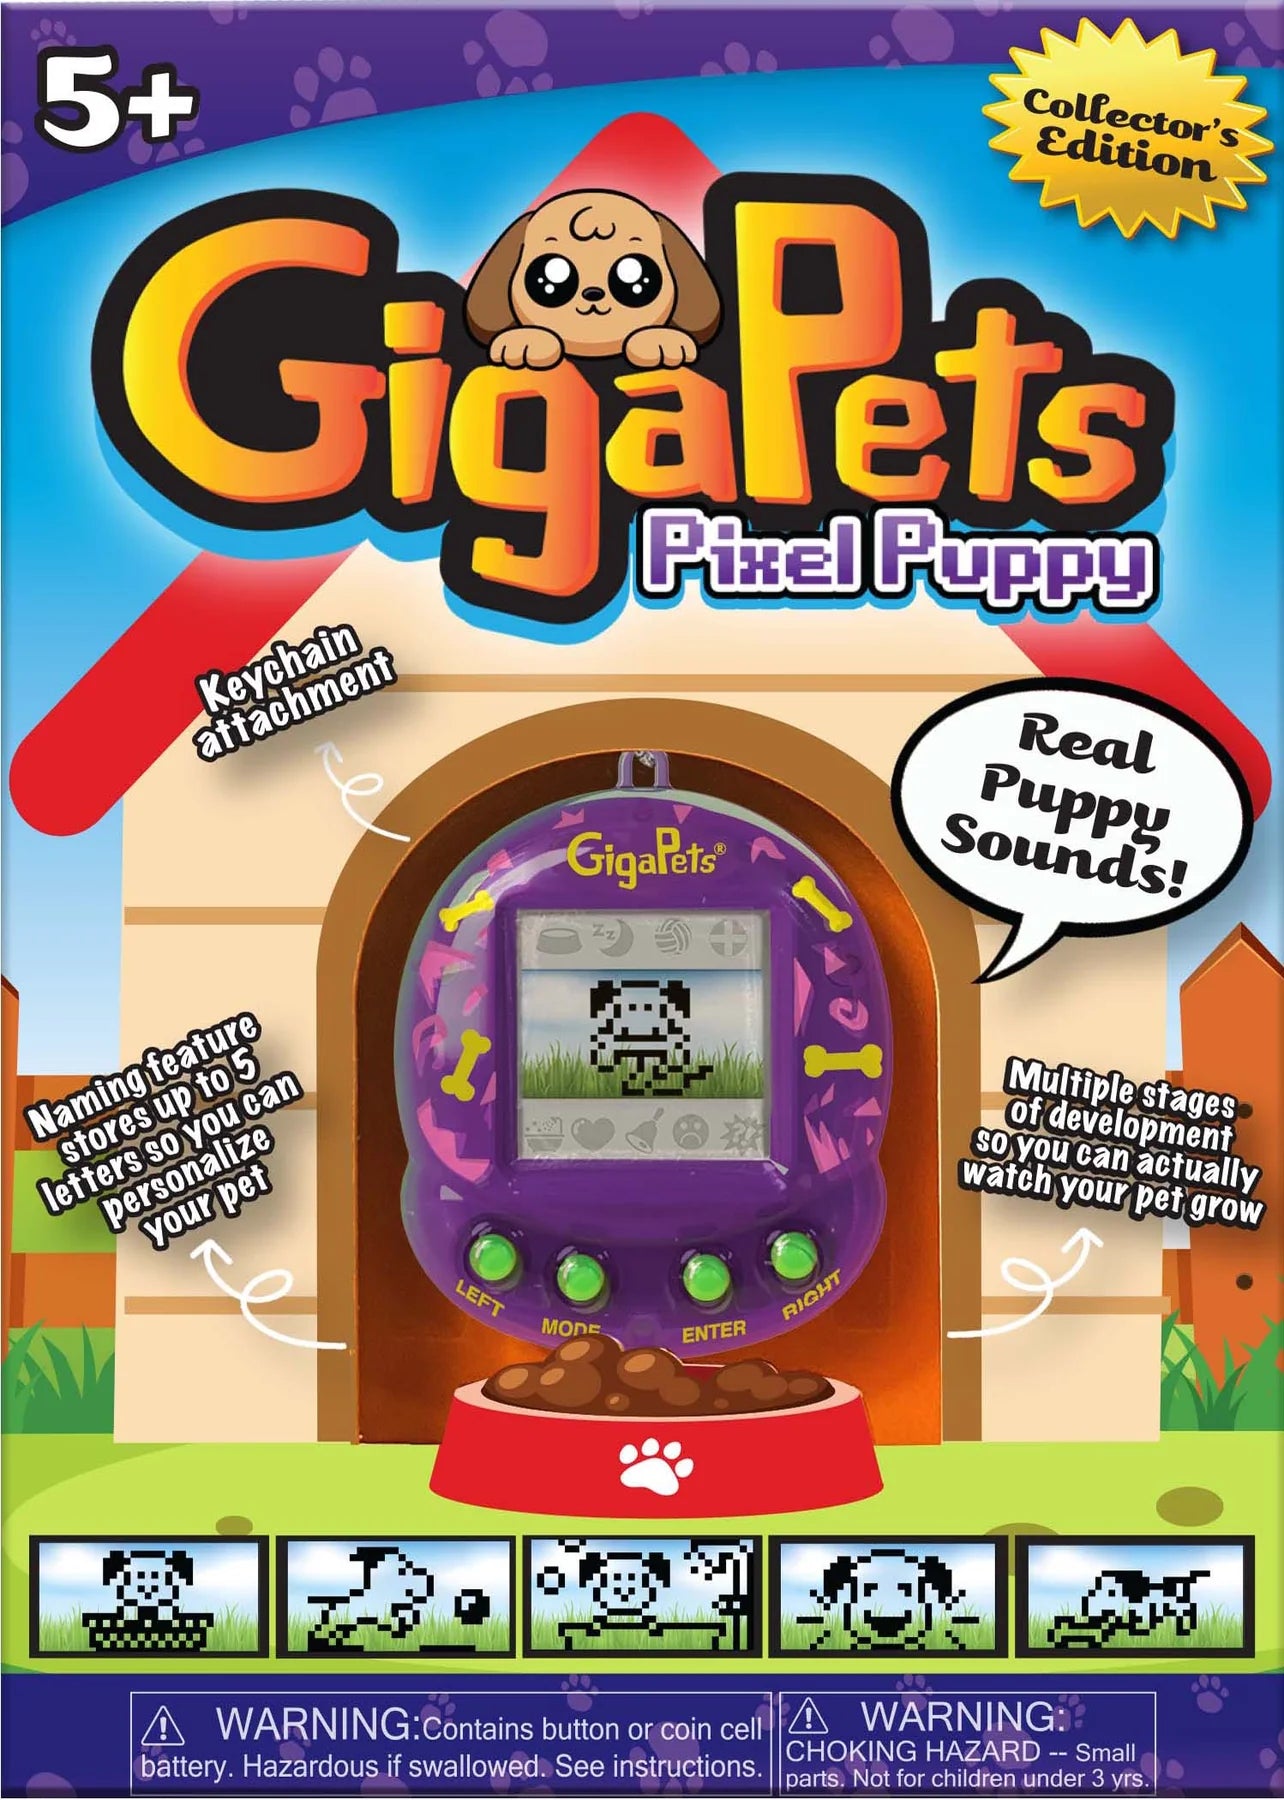 GigaPets Pixel Puppy by Top Secret Toys #1063